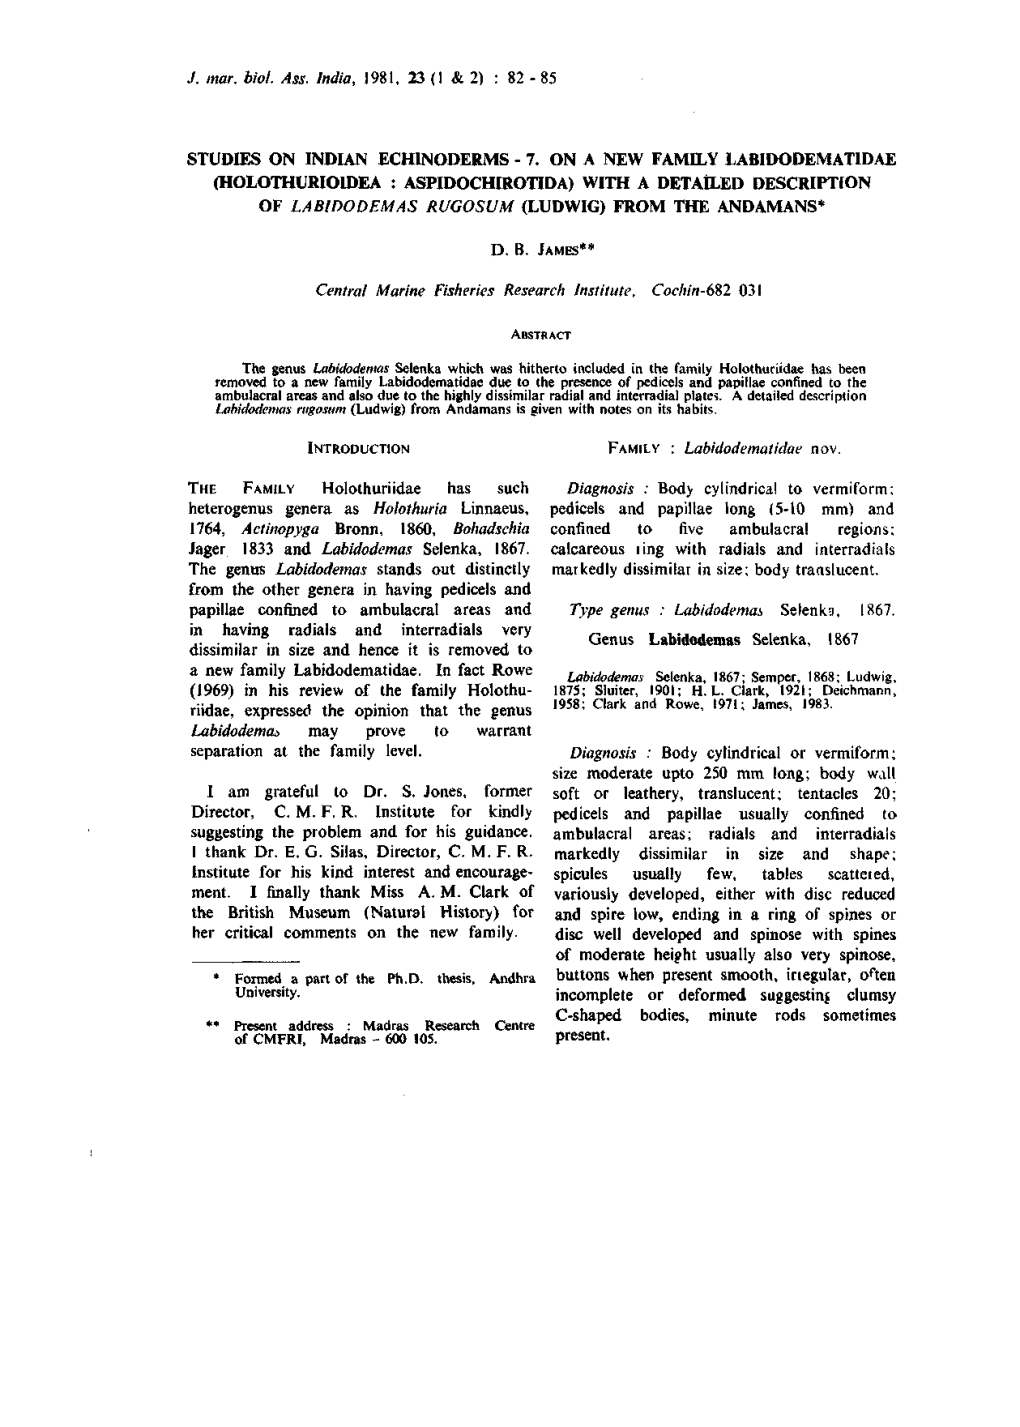 J. Mar. Biol. Ass. India, 1981, 23 (1 & 2) : 82-85 STUDIES on INDIAN ECHINODERMS